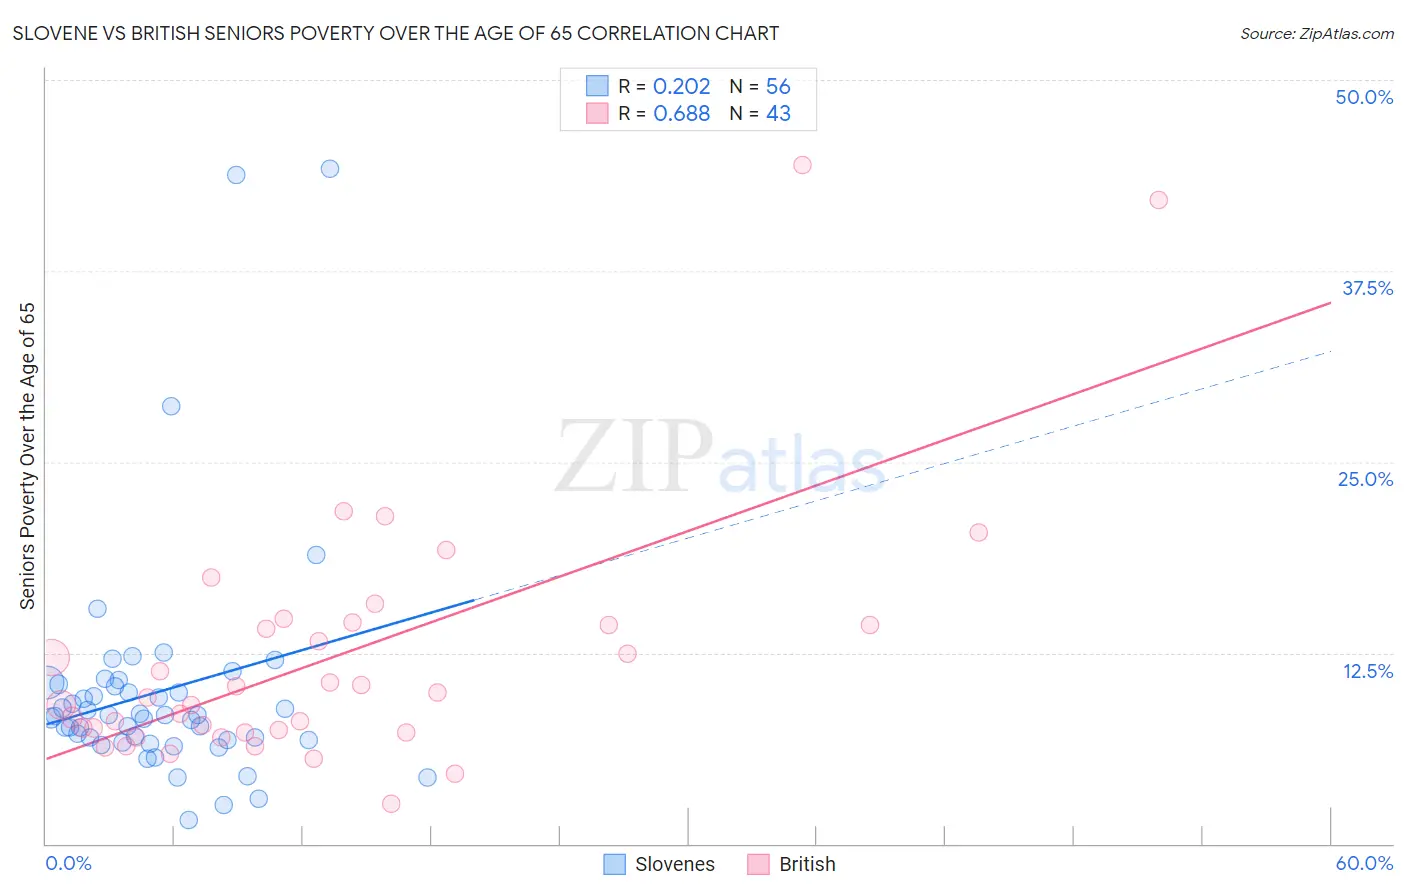 Slovene vs British Seniors Poverty Over the Age of 65